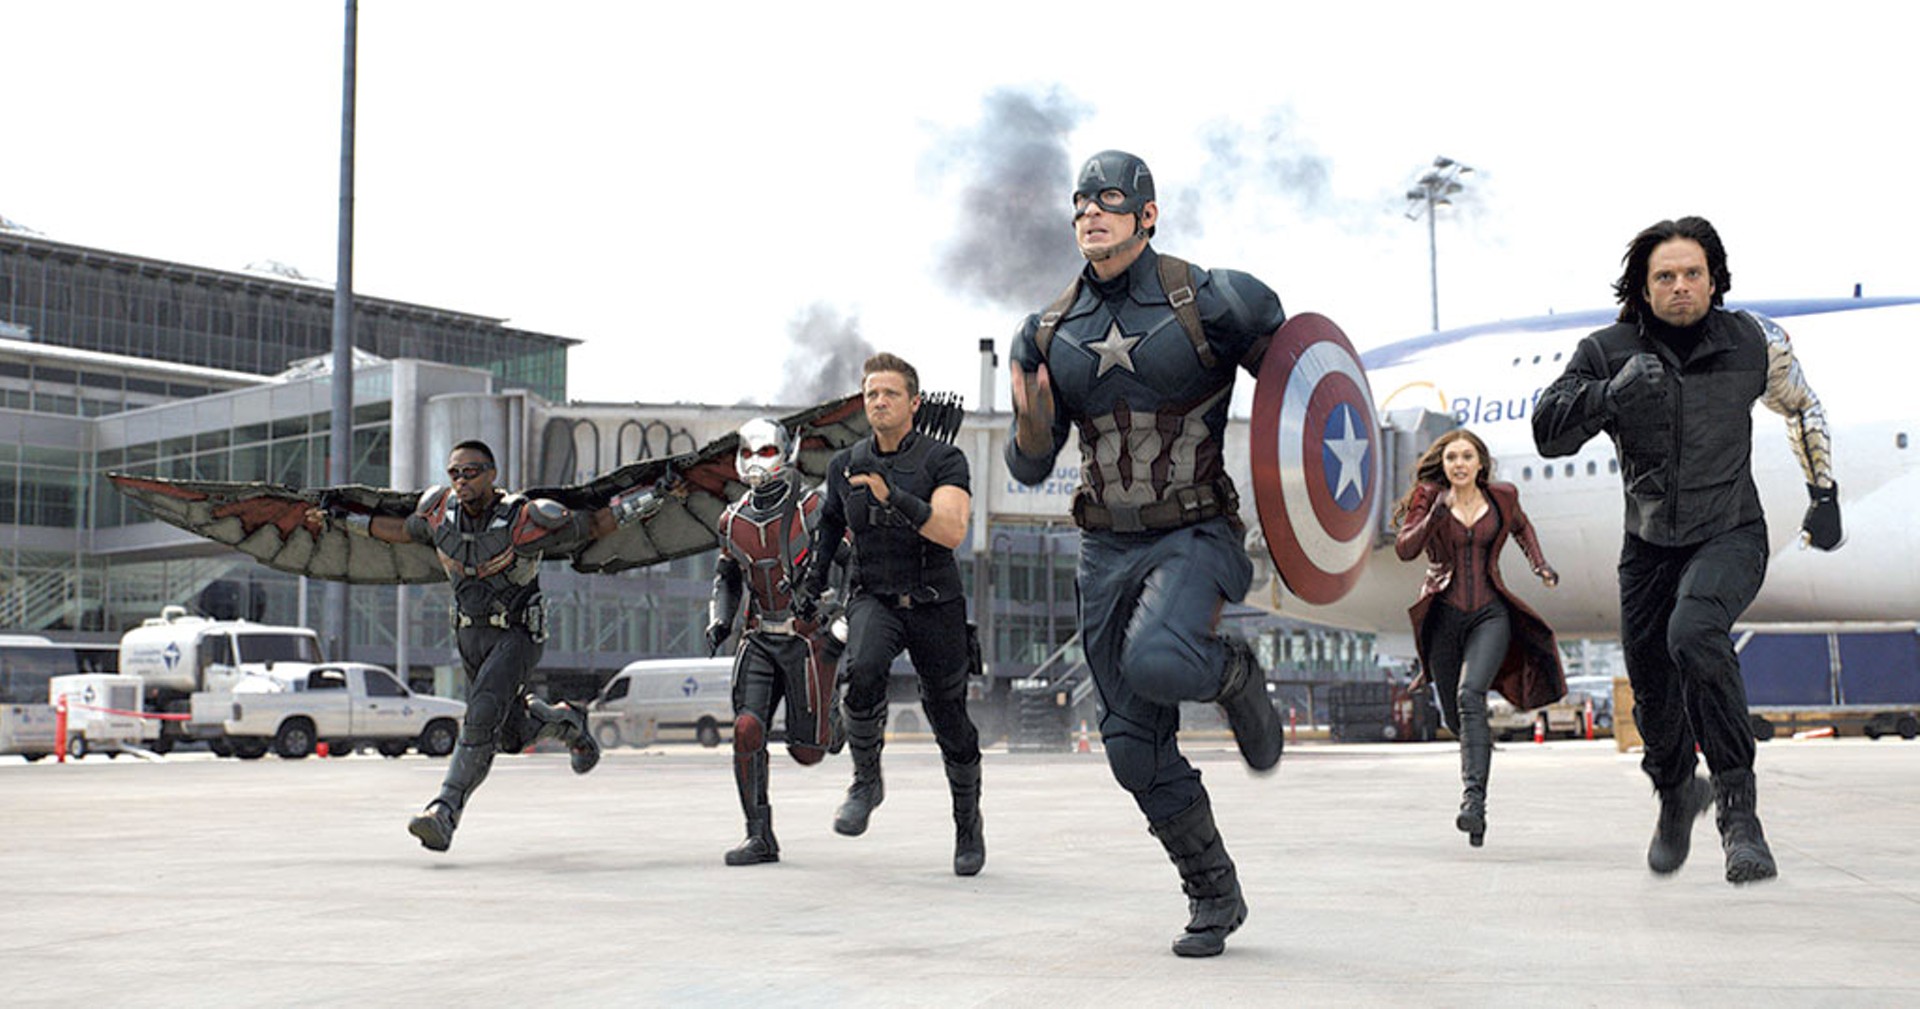 CIVIL DISOBEDIENCE The Avengers split in two — with Team Captain America pictured — in the latest Marvel superhero epic.